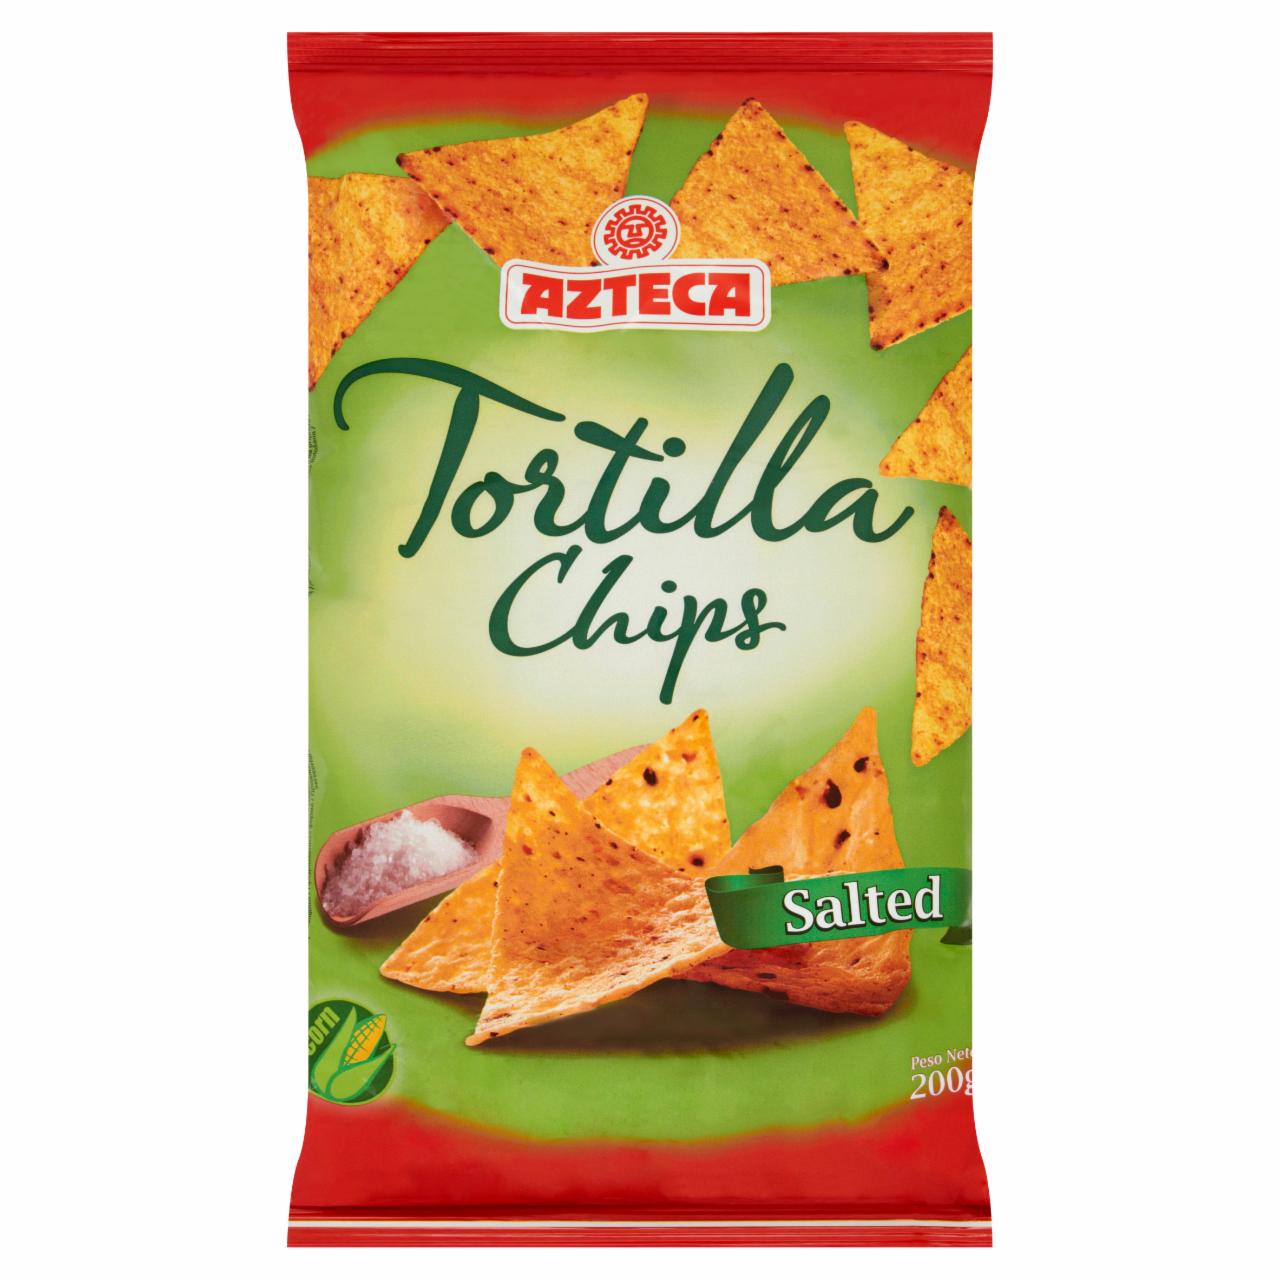 Zdjęcia - Azteca Salted Tortilla Chips 200 g